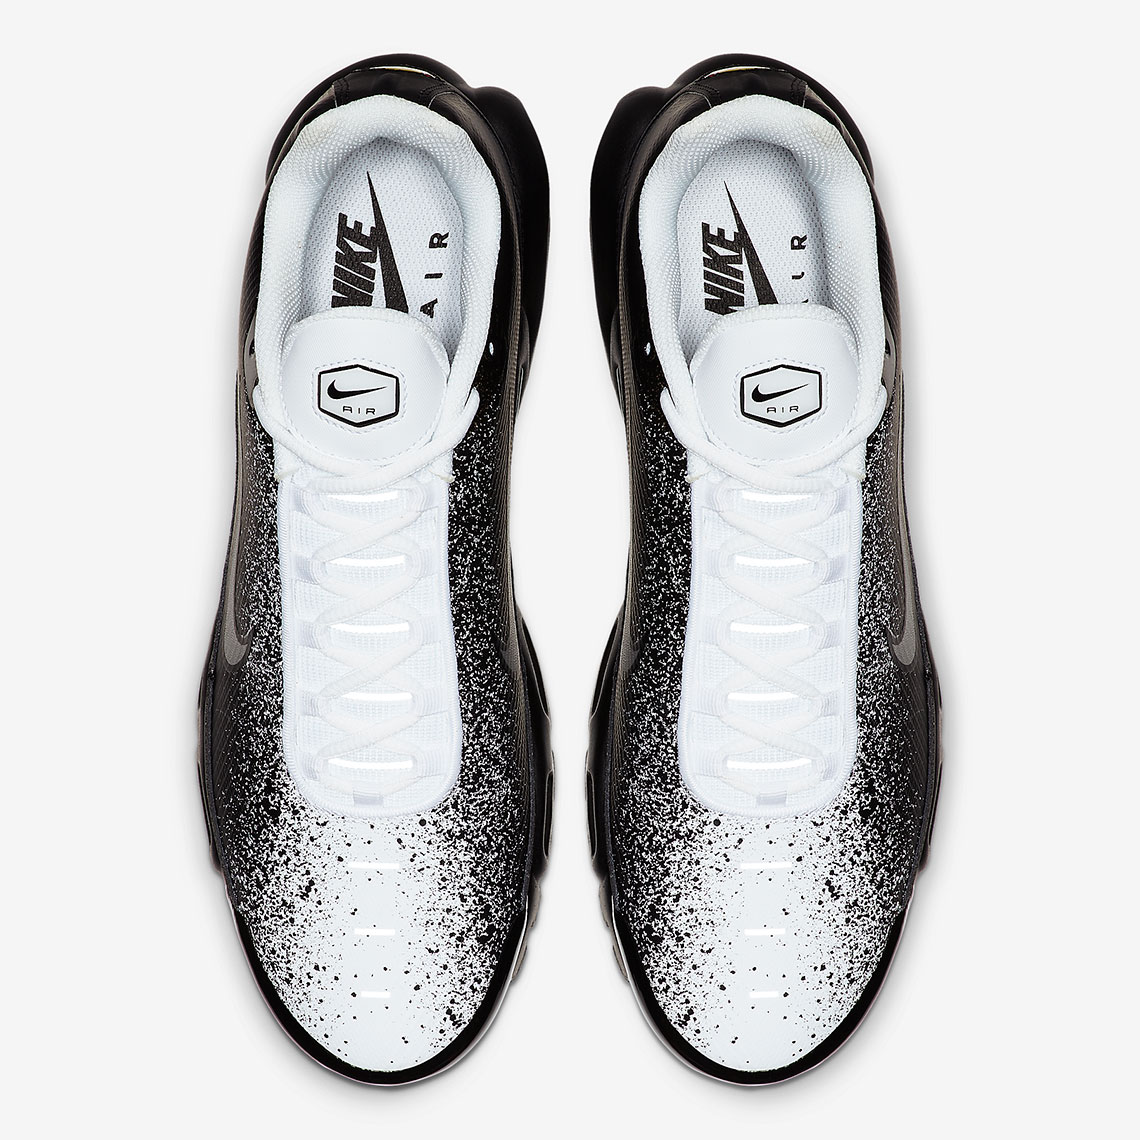 Nike Air Max Plus Spray Black CI7701 002 Release Info | SneakerNews.com